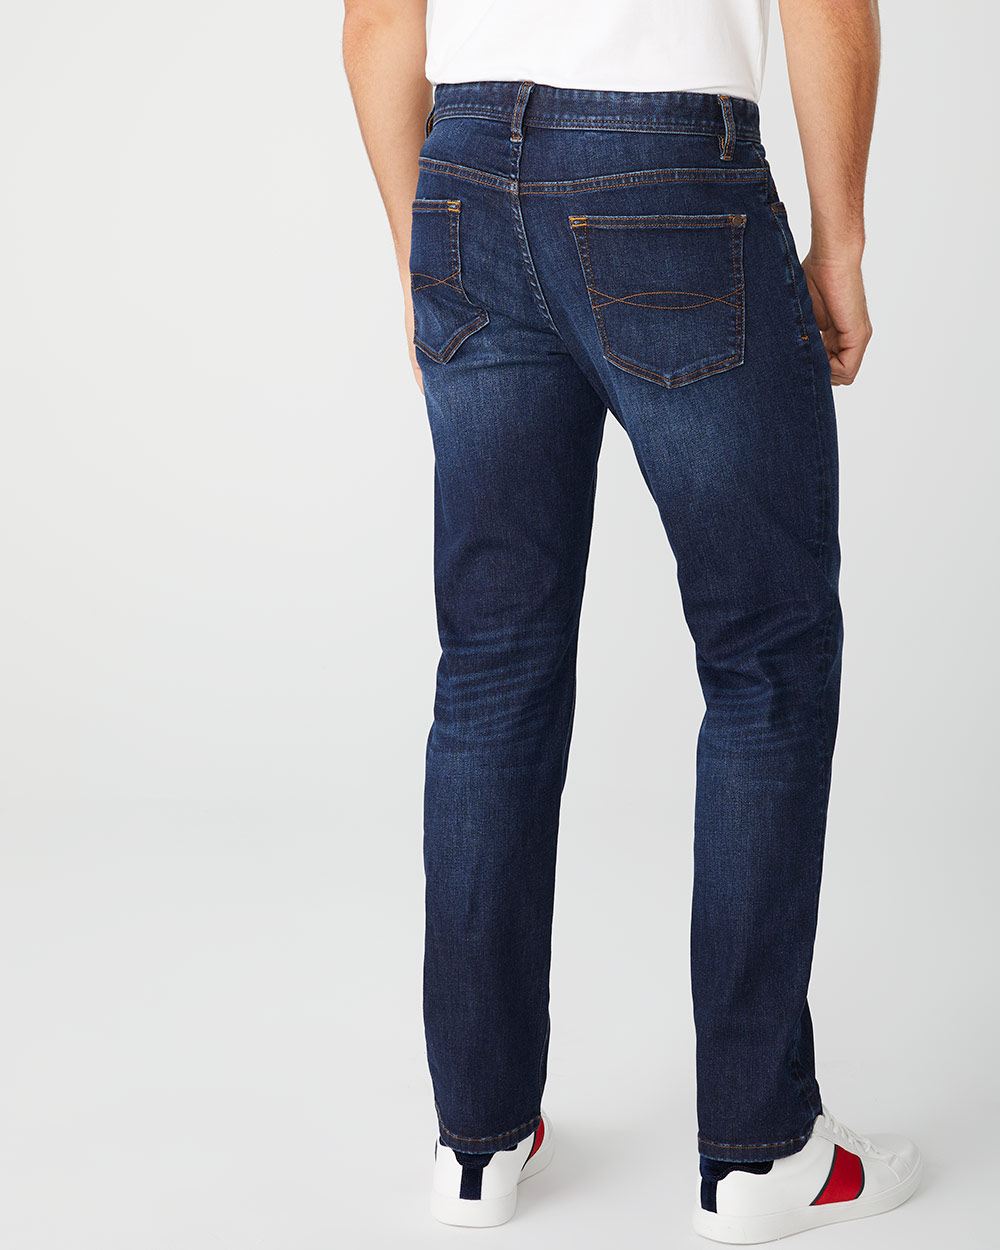 Straight leg Medium Wash Jeans - 30'' inseam | RW&CO.